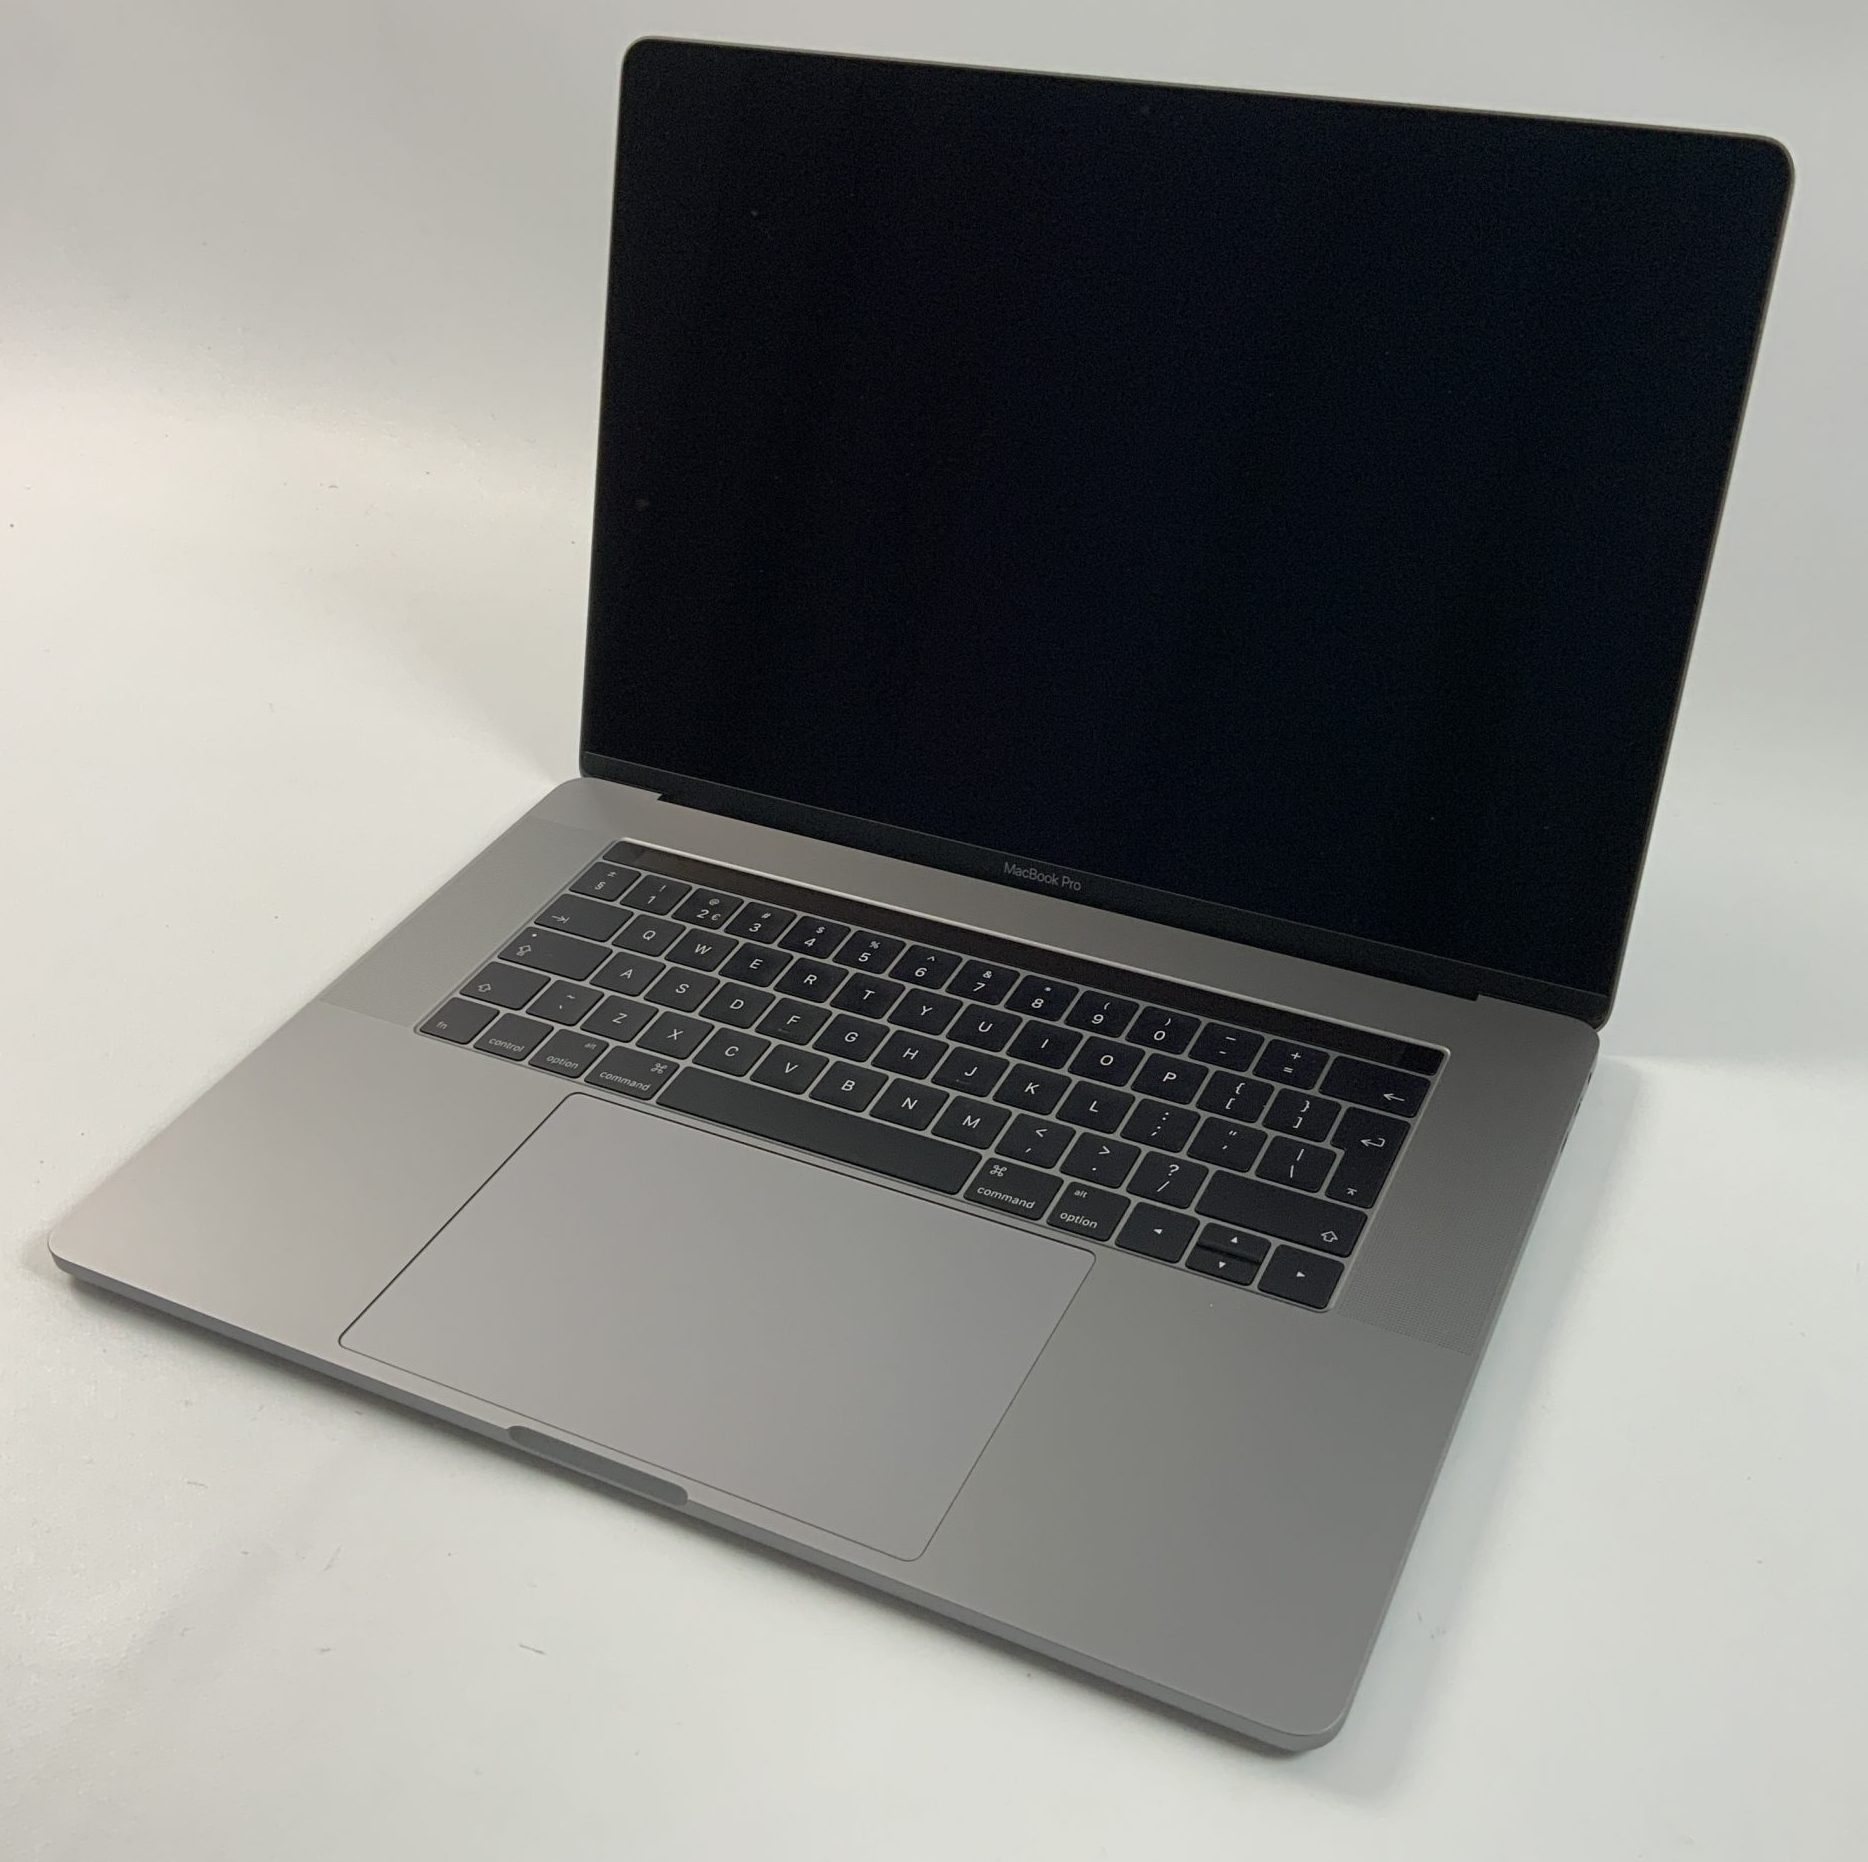 MacBook Pro 15" Touch Bar Late 2016 (Intel Quad-Core i7 2.6 GHz 16 GB RAM 256 GB SSD), Silver, Intel Quad-Core i7 2.6 GHz, 16 GB RAM, 256 GB SSD, bild 1